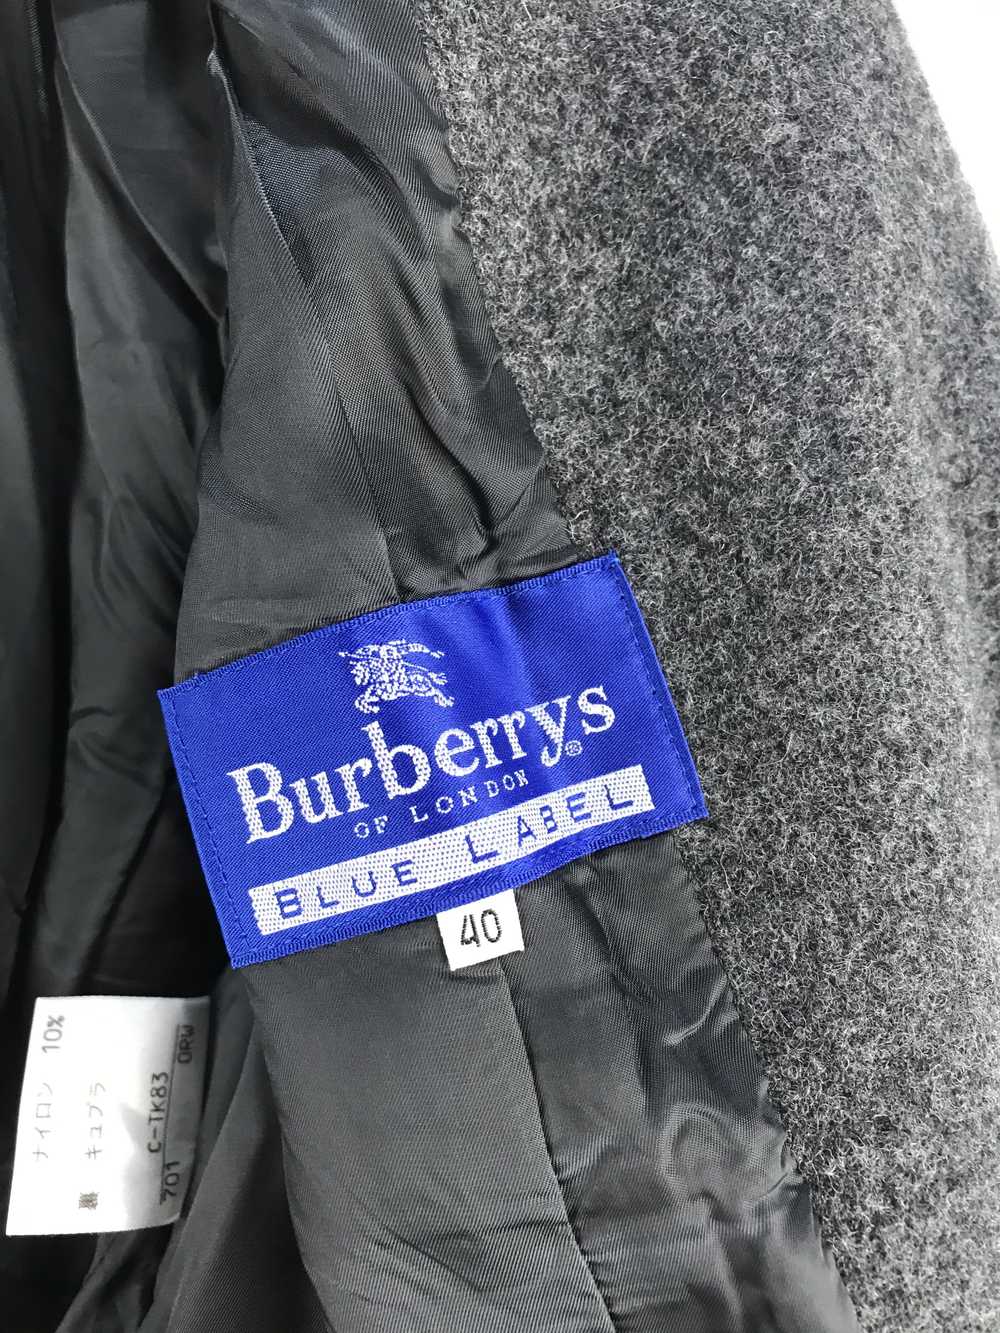 Burberry Blue Label Wool Jacket - image 10